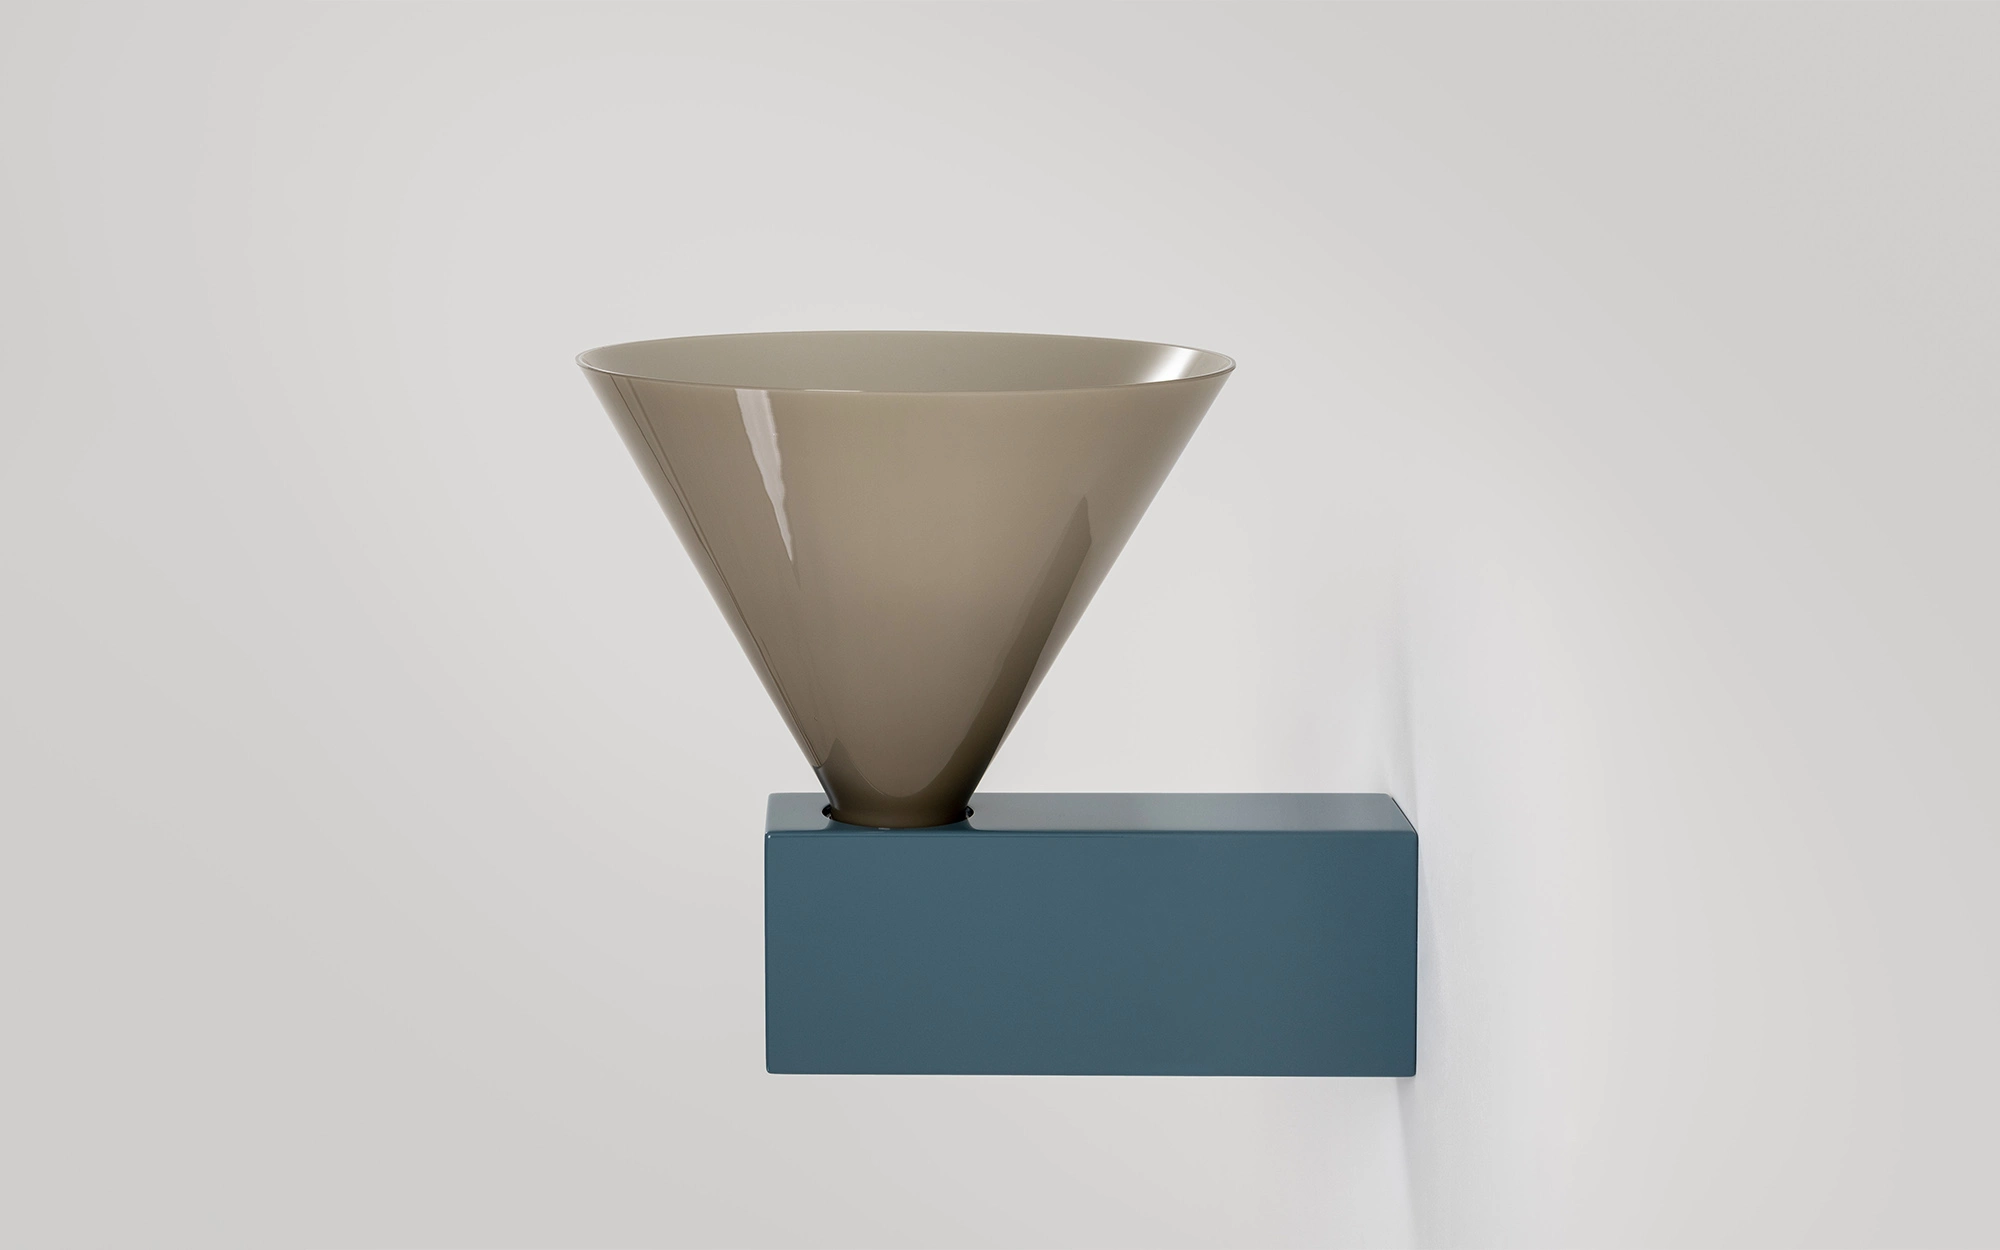 Signal W POLYCHROMATIC - Edward Barber and Jay Osgerby - Vase - Galerie kreo